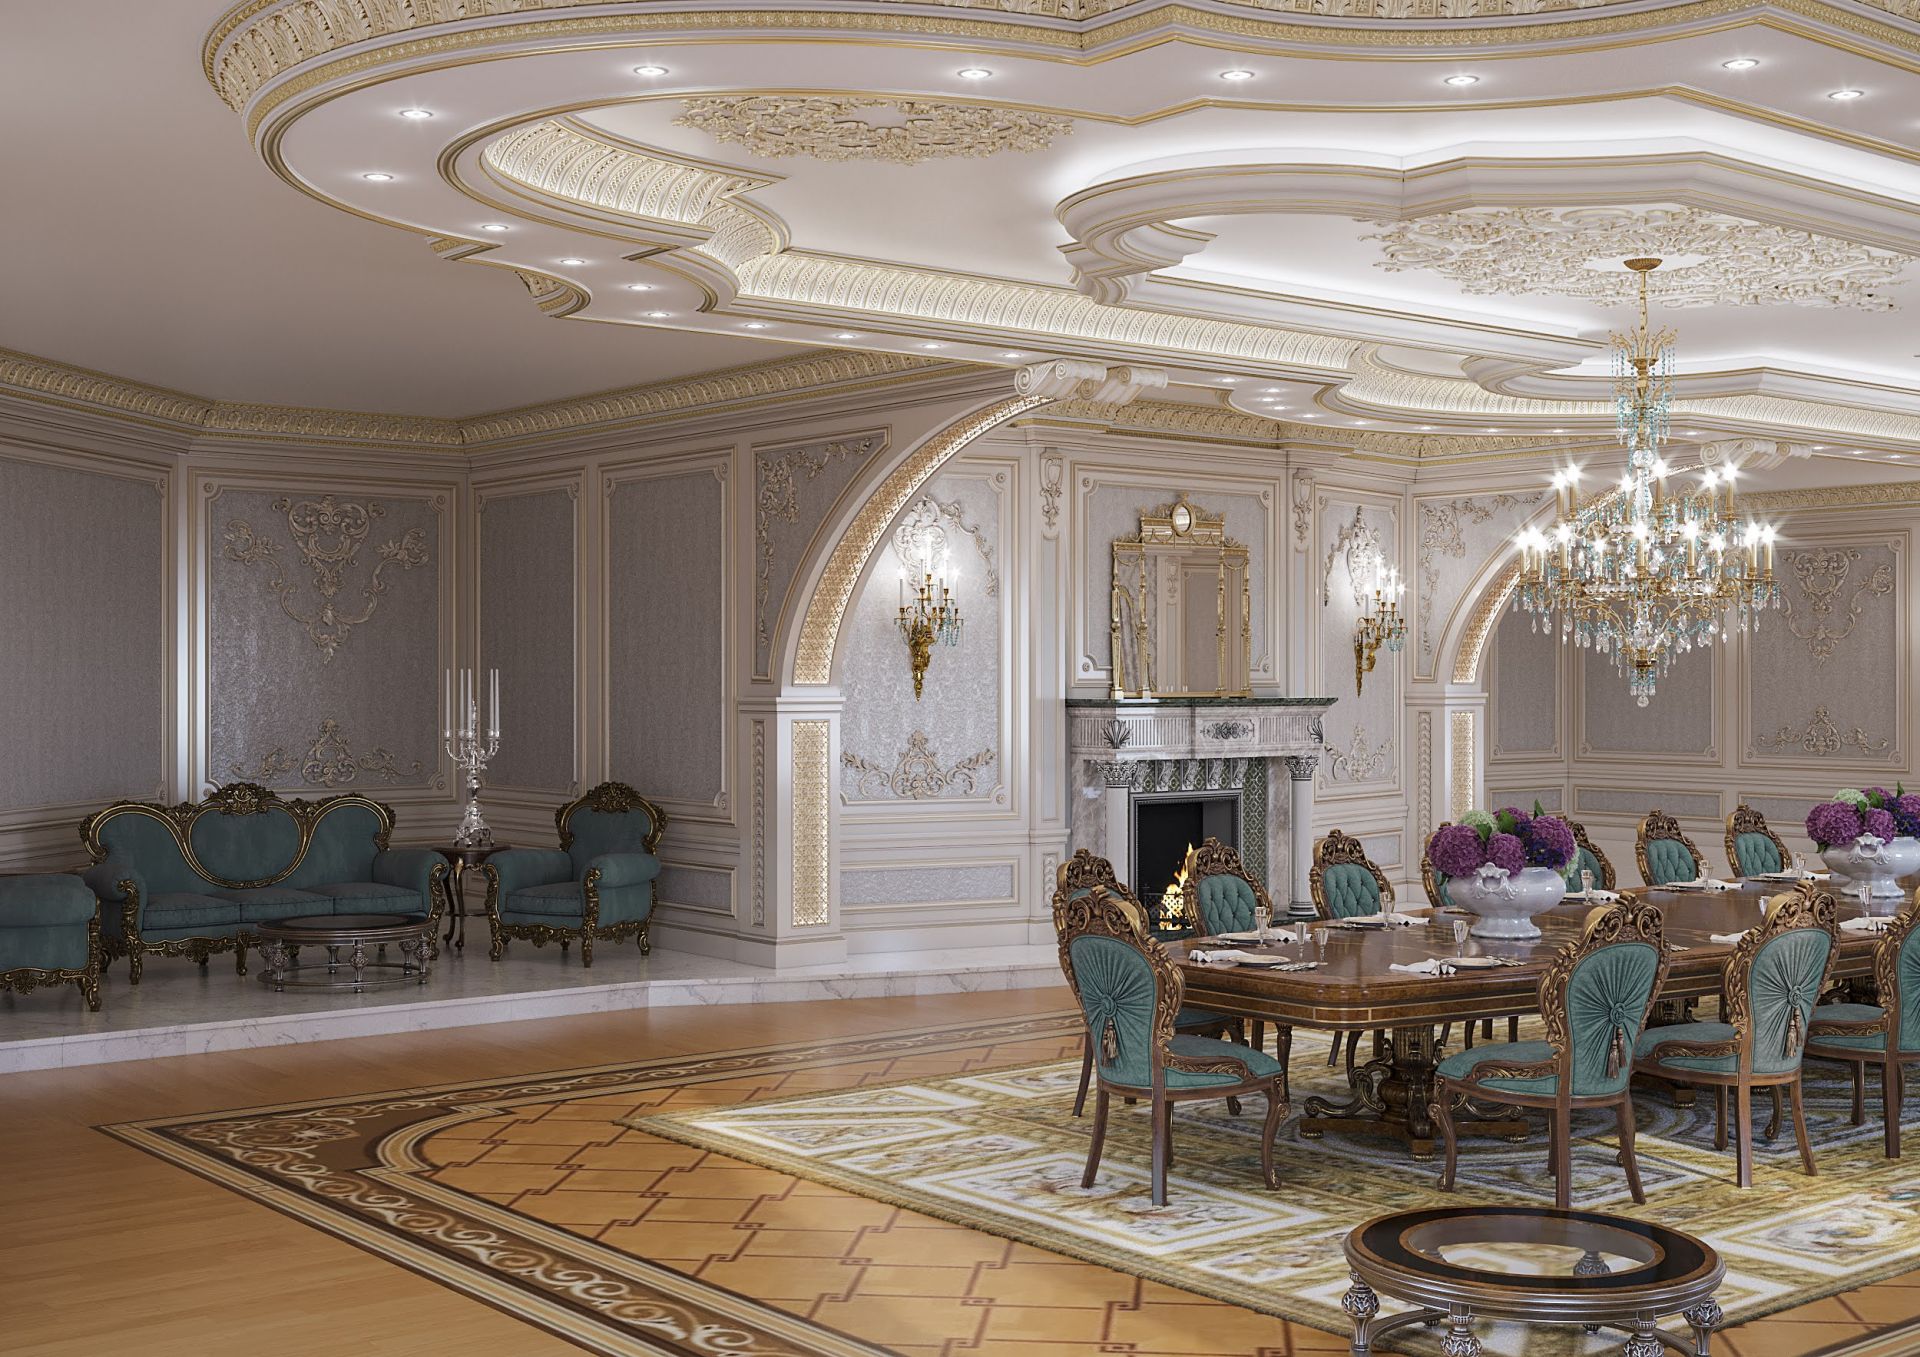 Luxurious banquet hall interior